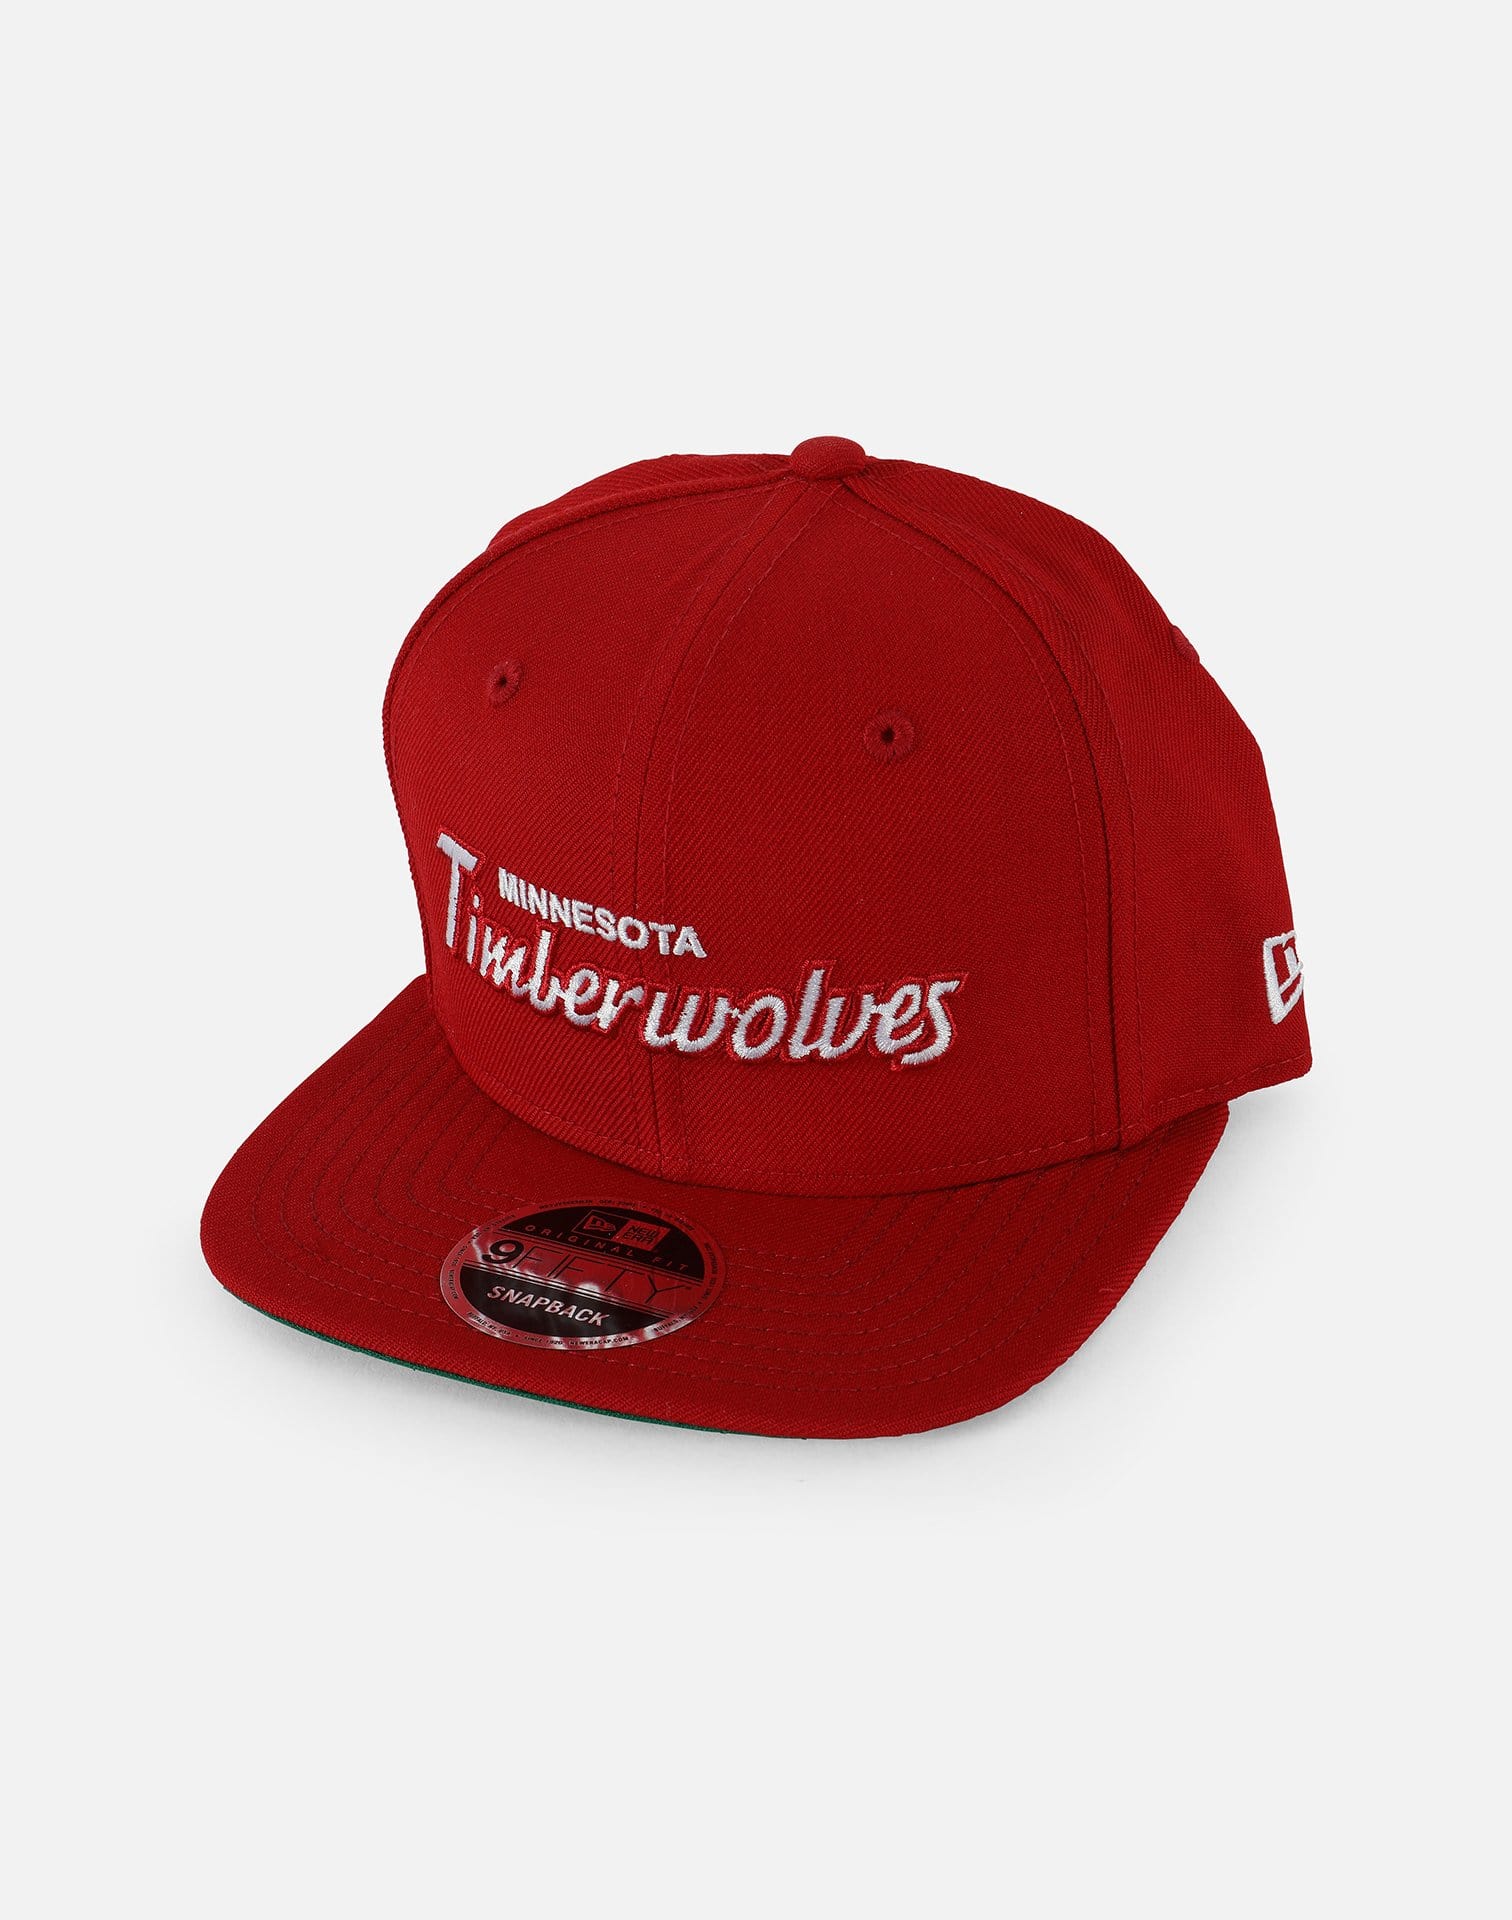 New Era 950 NBA Minnesota Timberwolves Snapback Hat